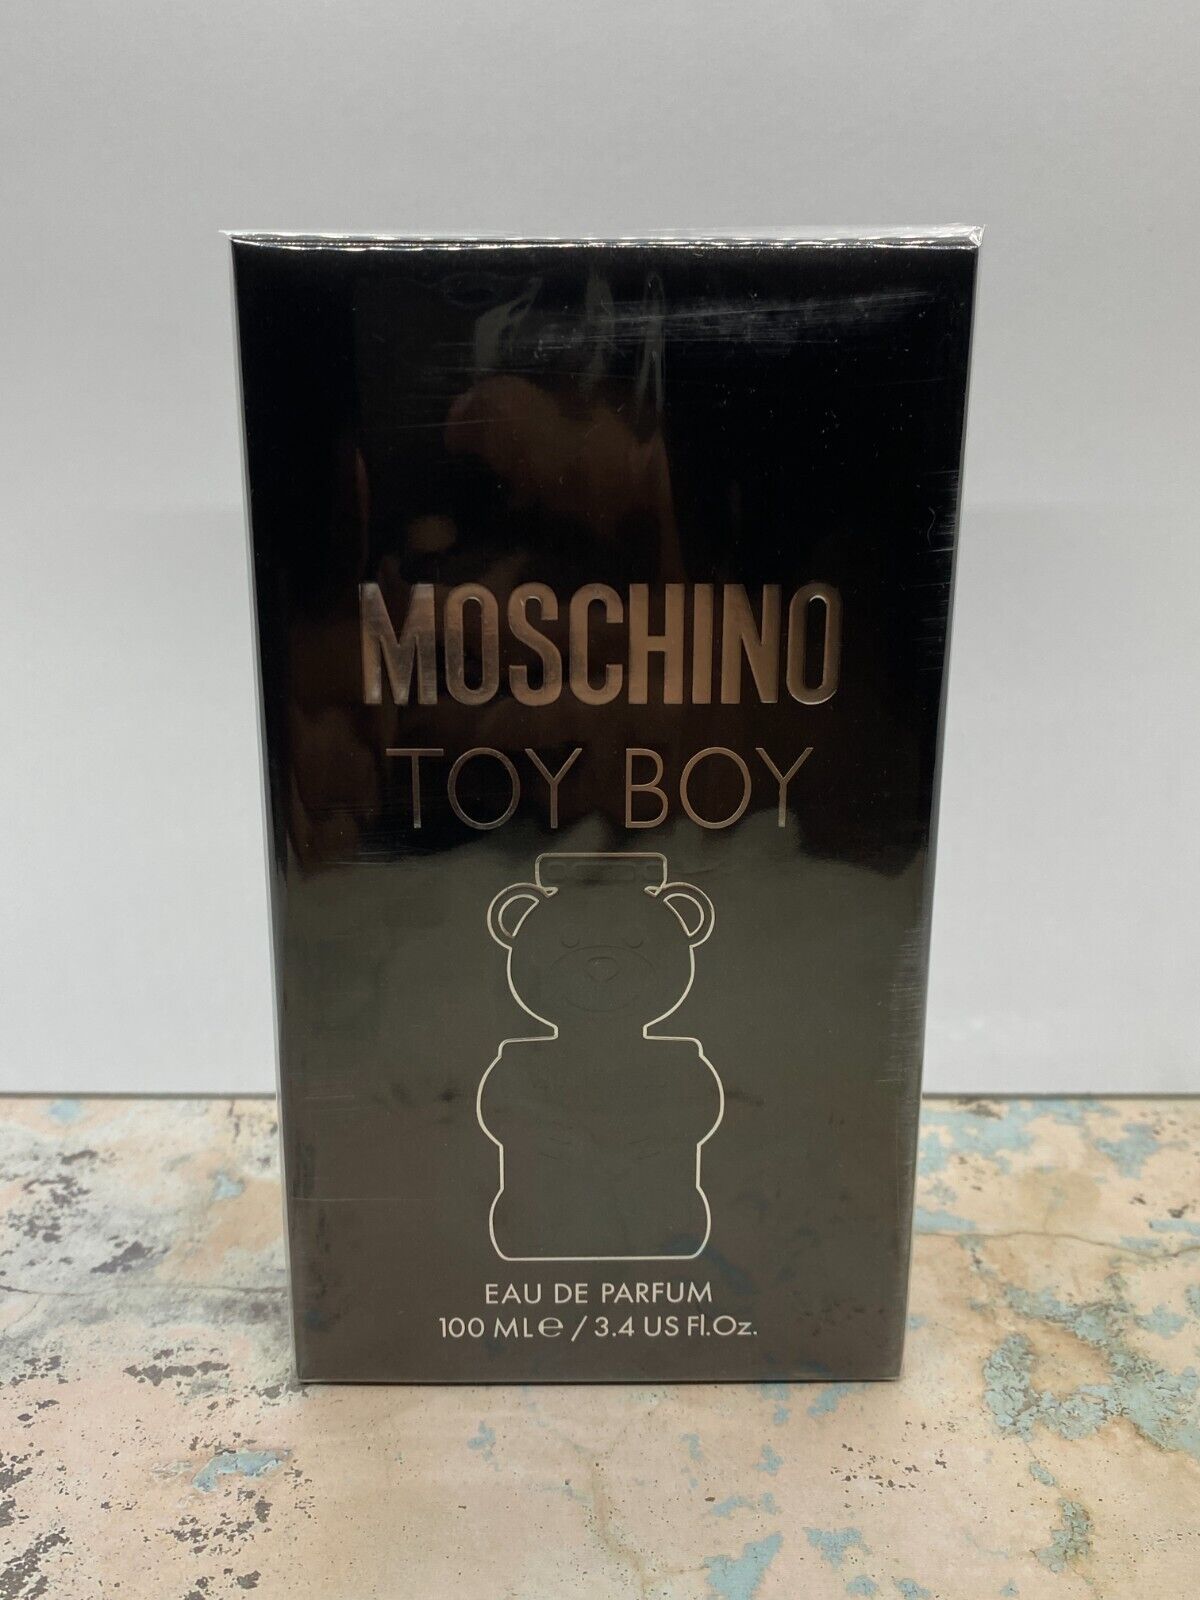 USA MOSCHINO Toy Boy Eau De Parfume Spray for Men, 3.4 fl oz NEW , in BOX